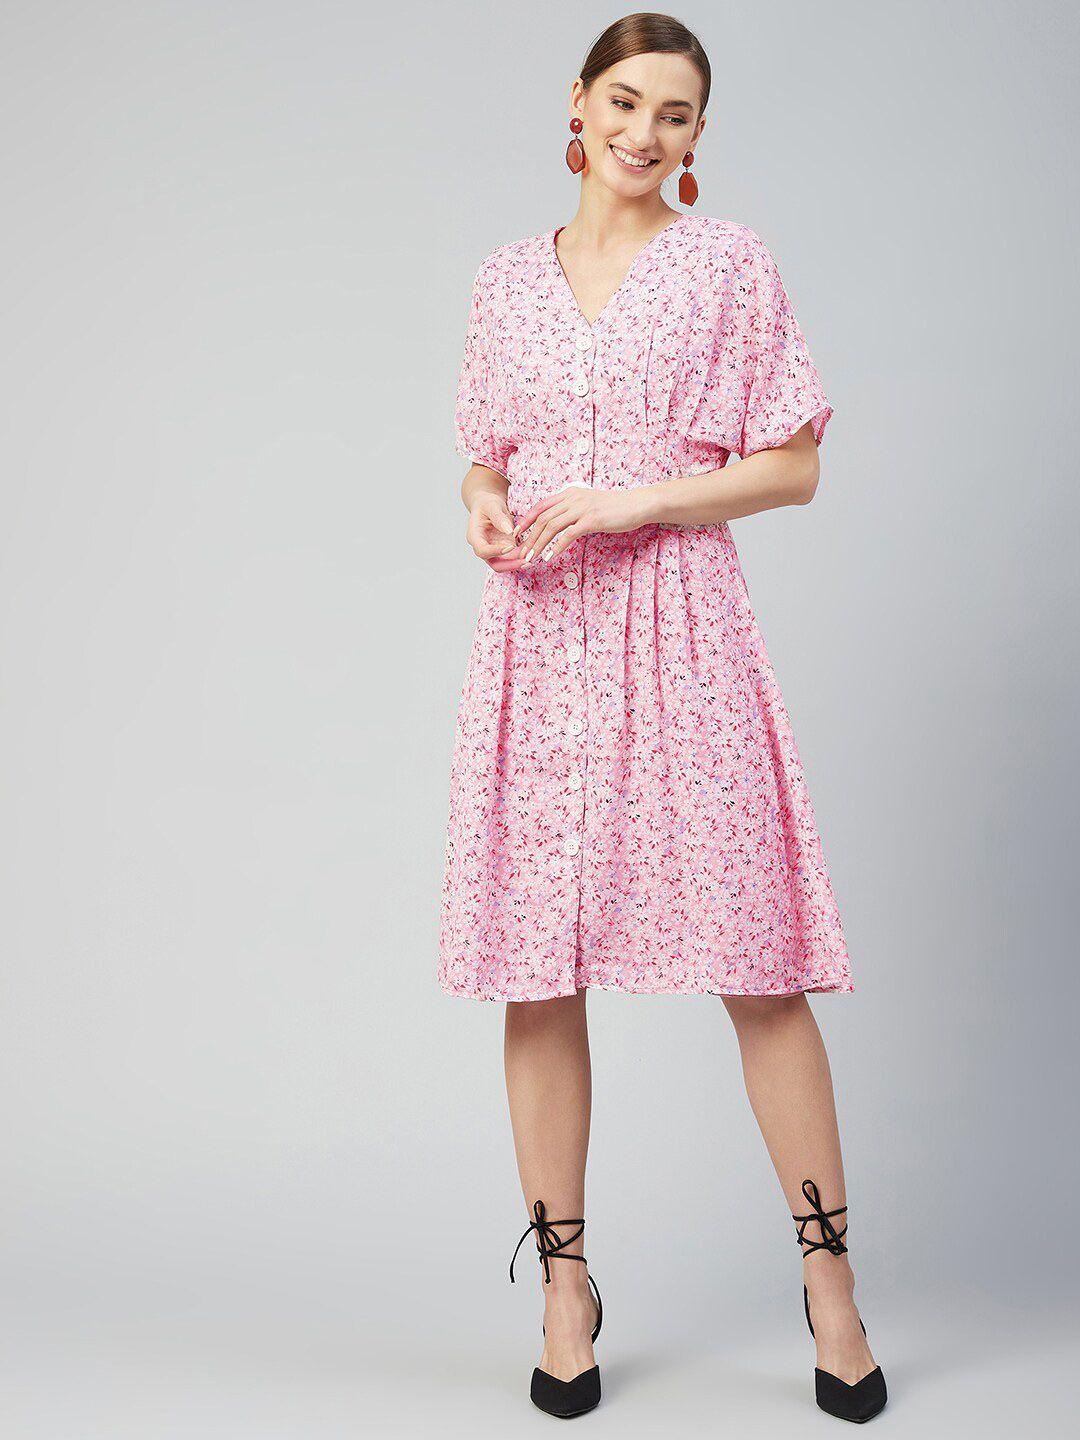 marie-claire-women-pink-floral-crepe-dress